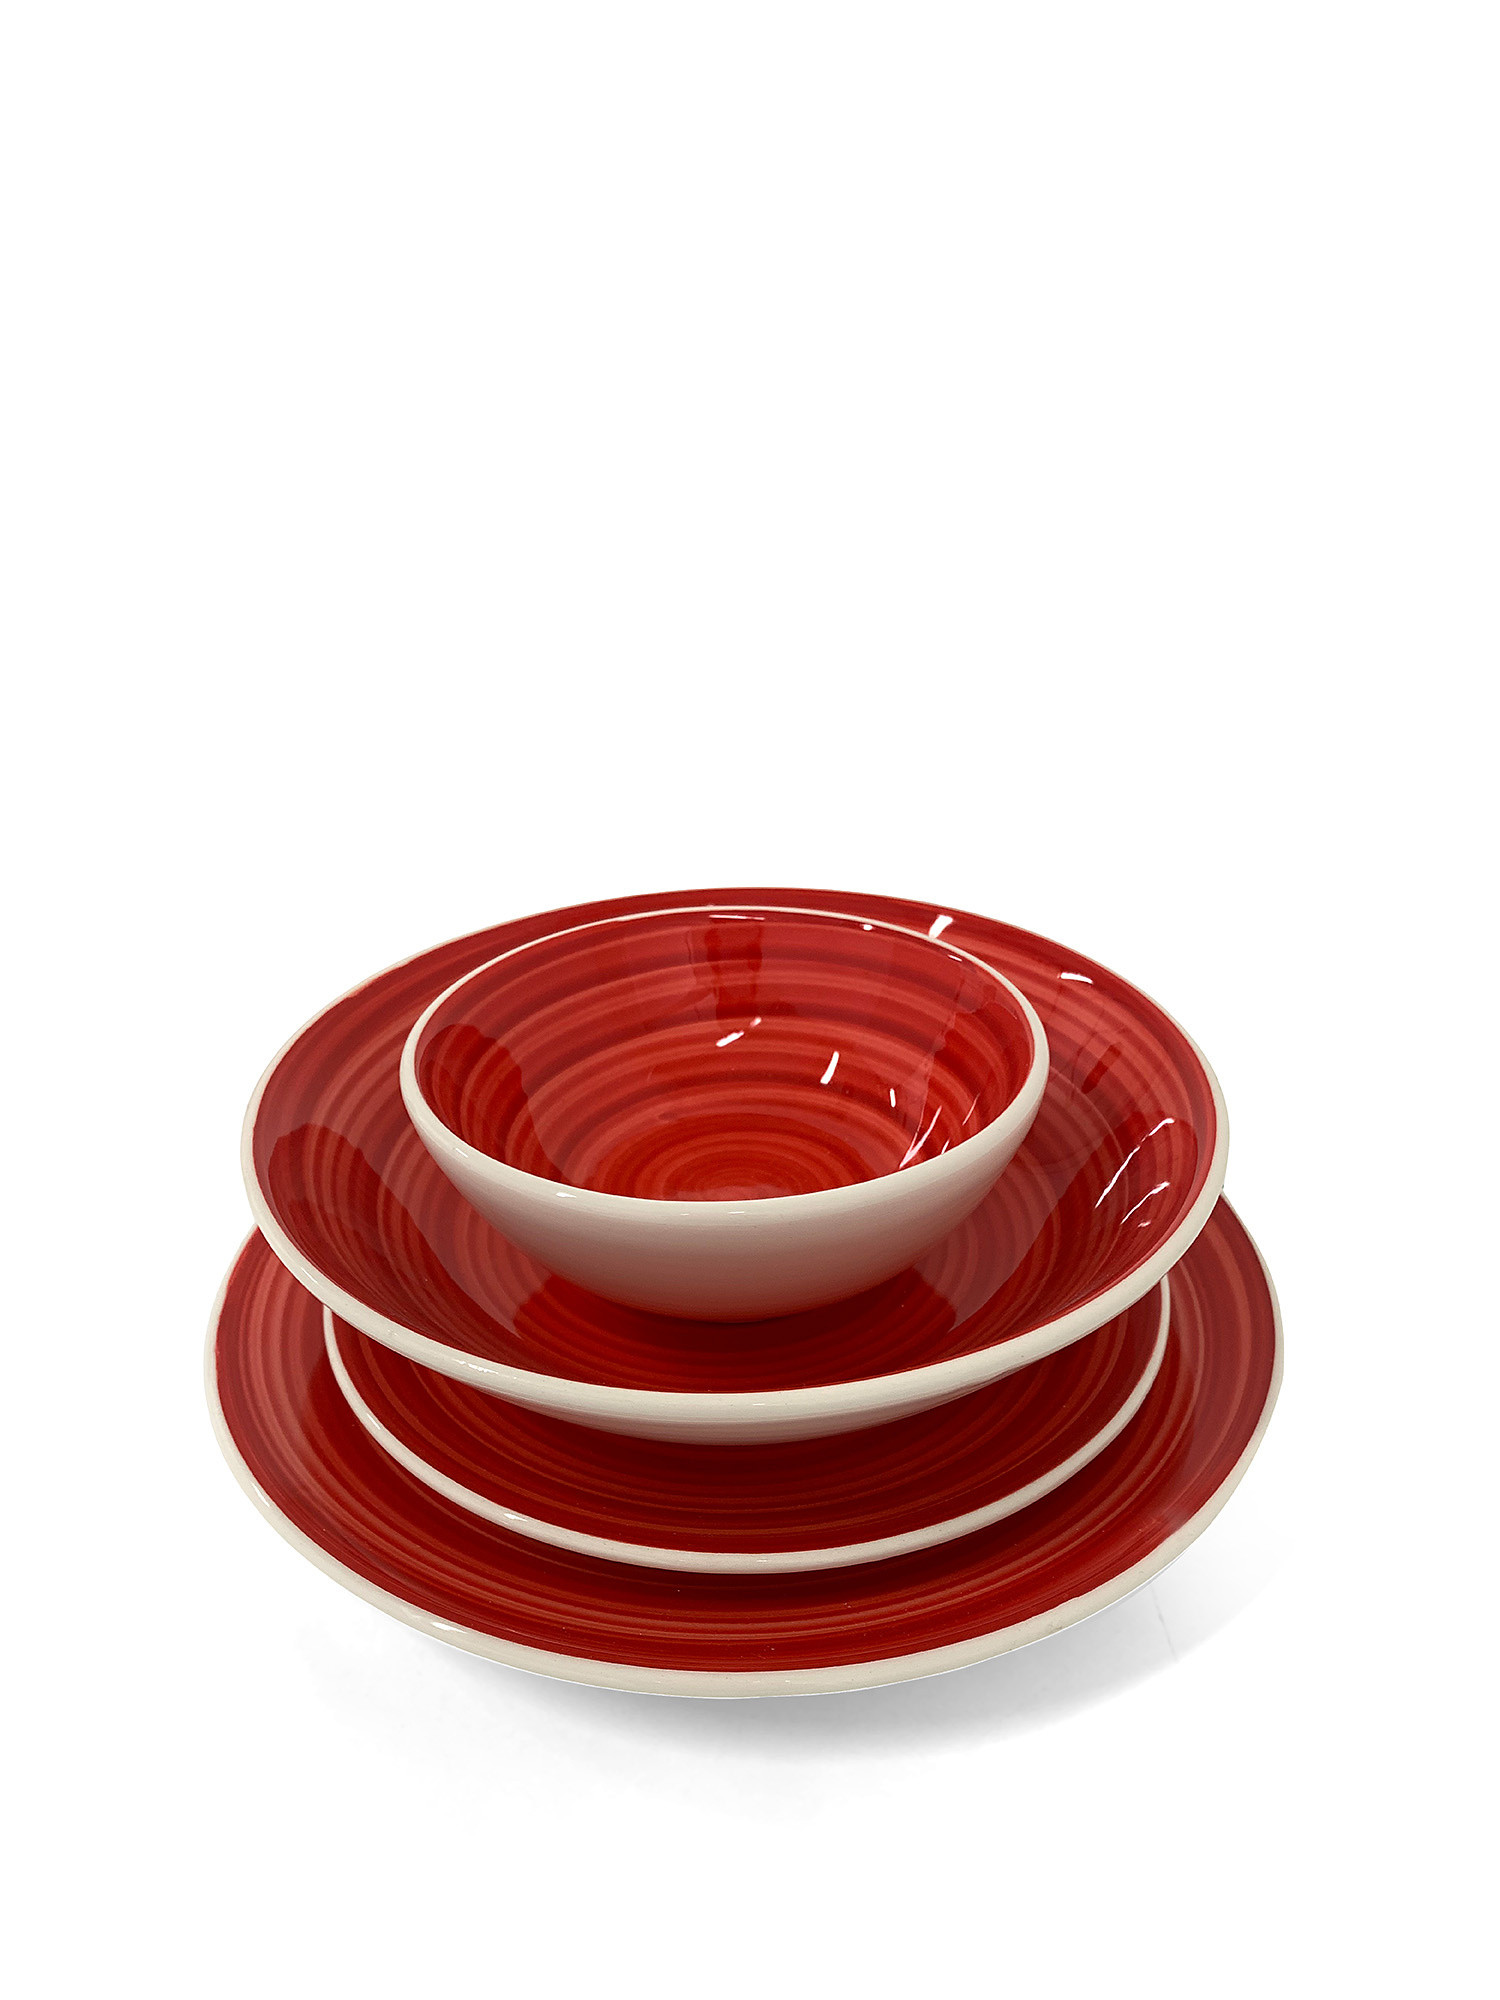 Piatto fondo ceramica dipinta a mano Spirale, Rosso, large image number 1